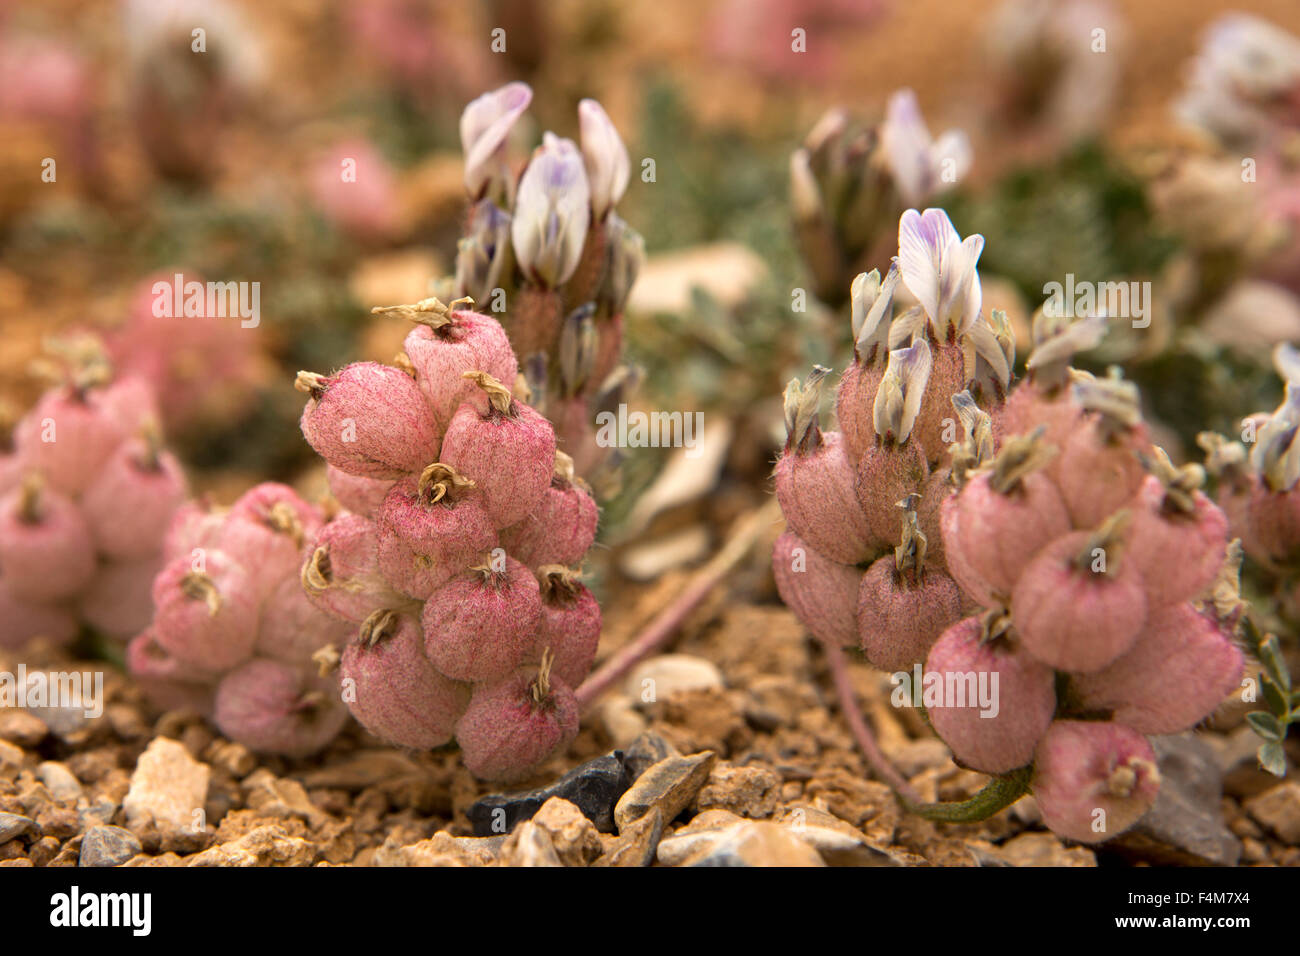 India, Jammu & Kashmir, Ladakh, Changtang, flora, tiny purple and white wild flowers emerging from pink balls Stock Photo